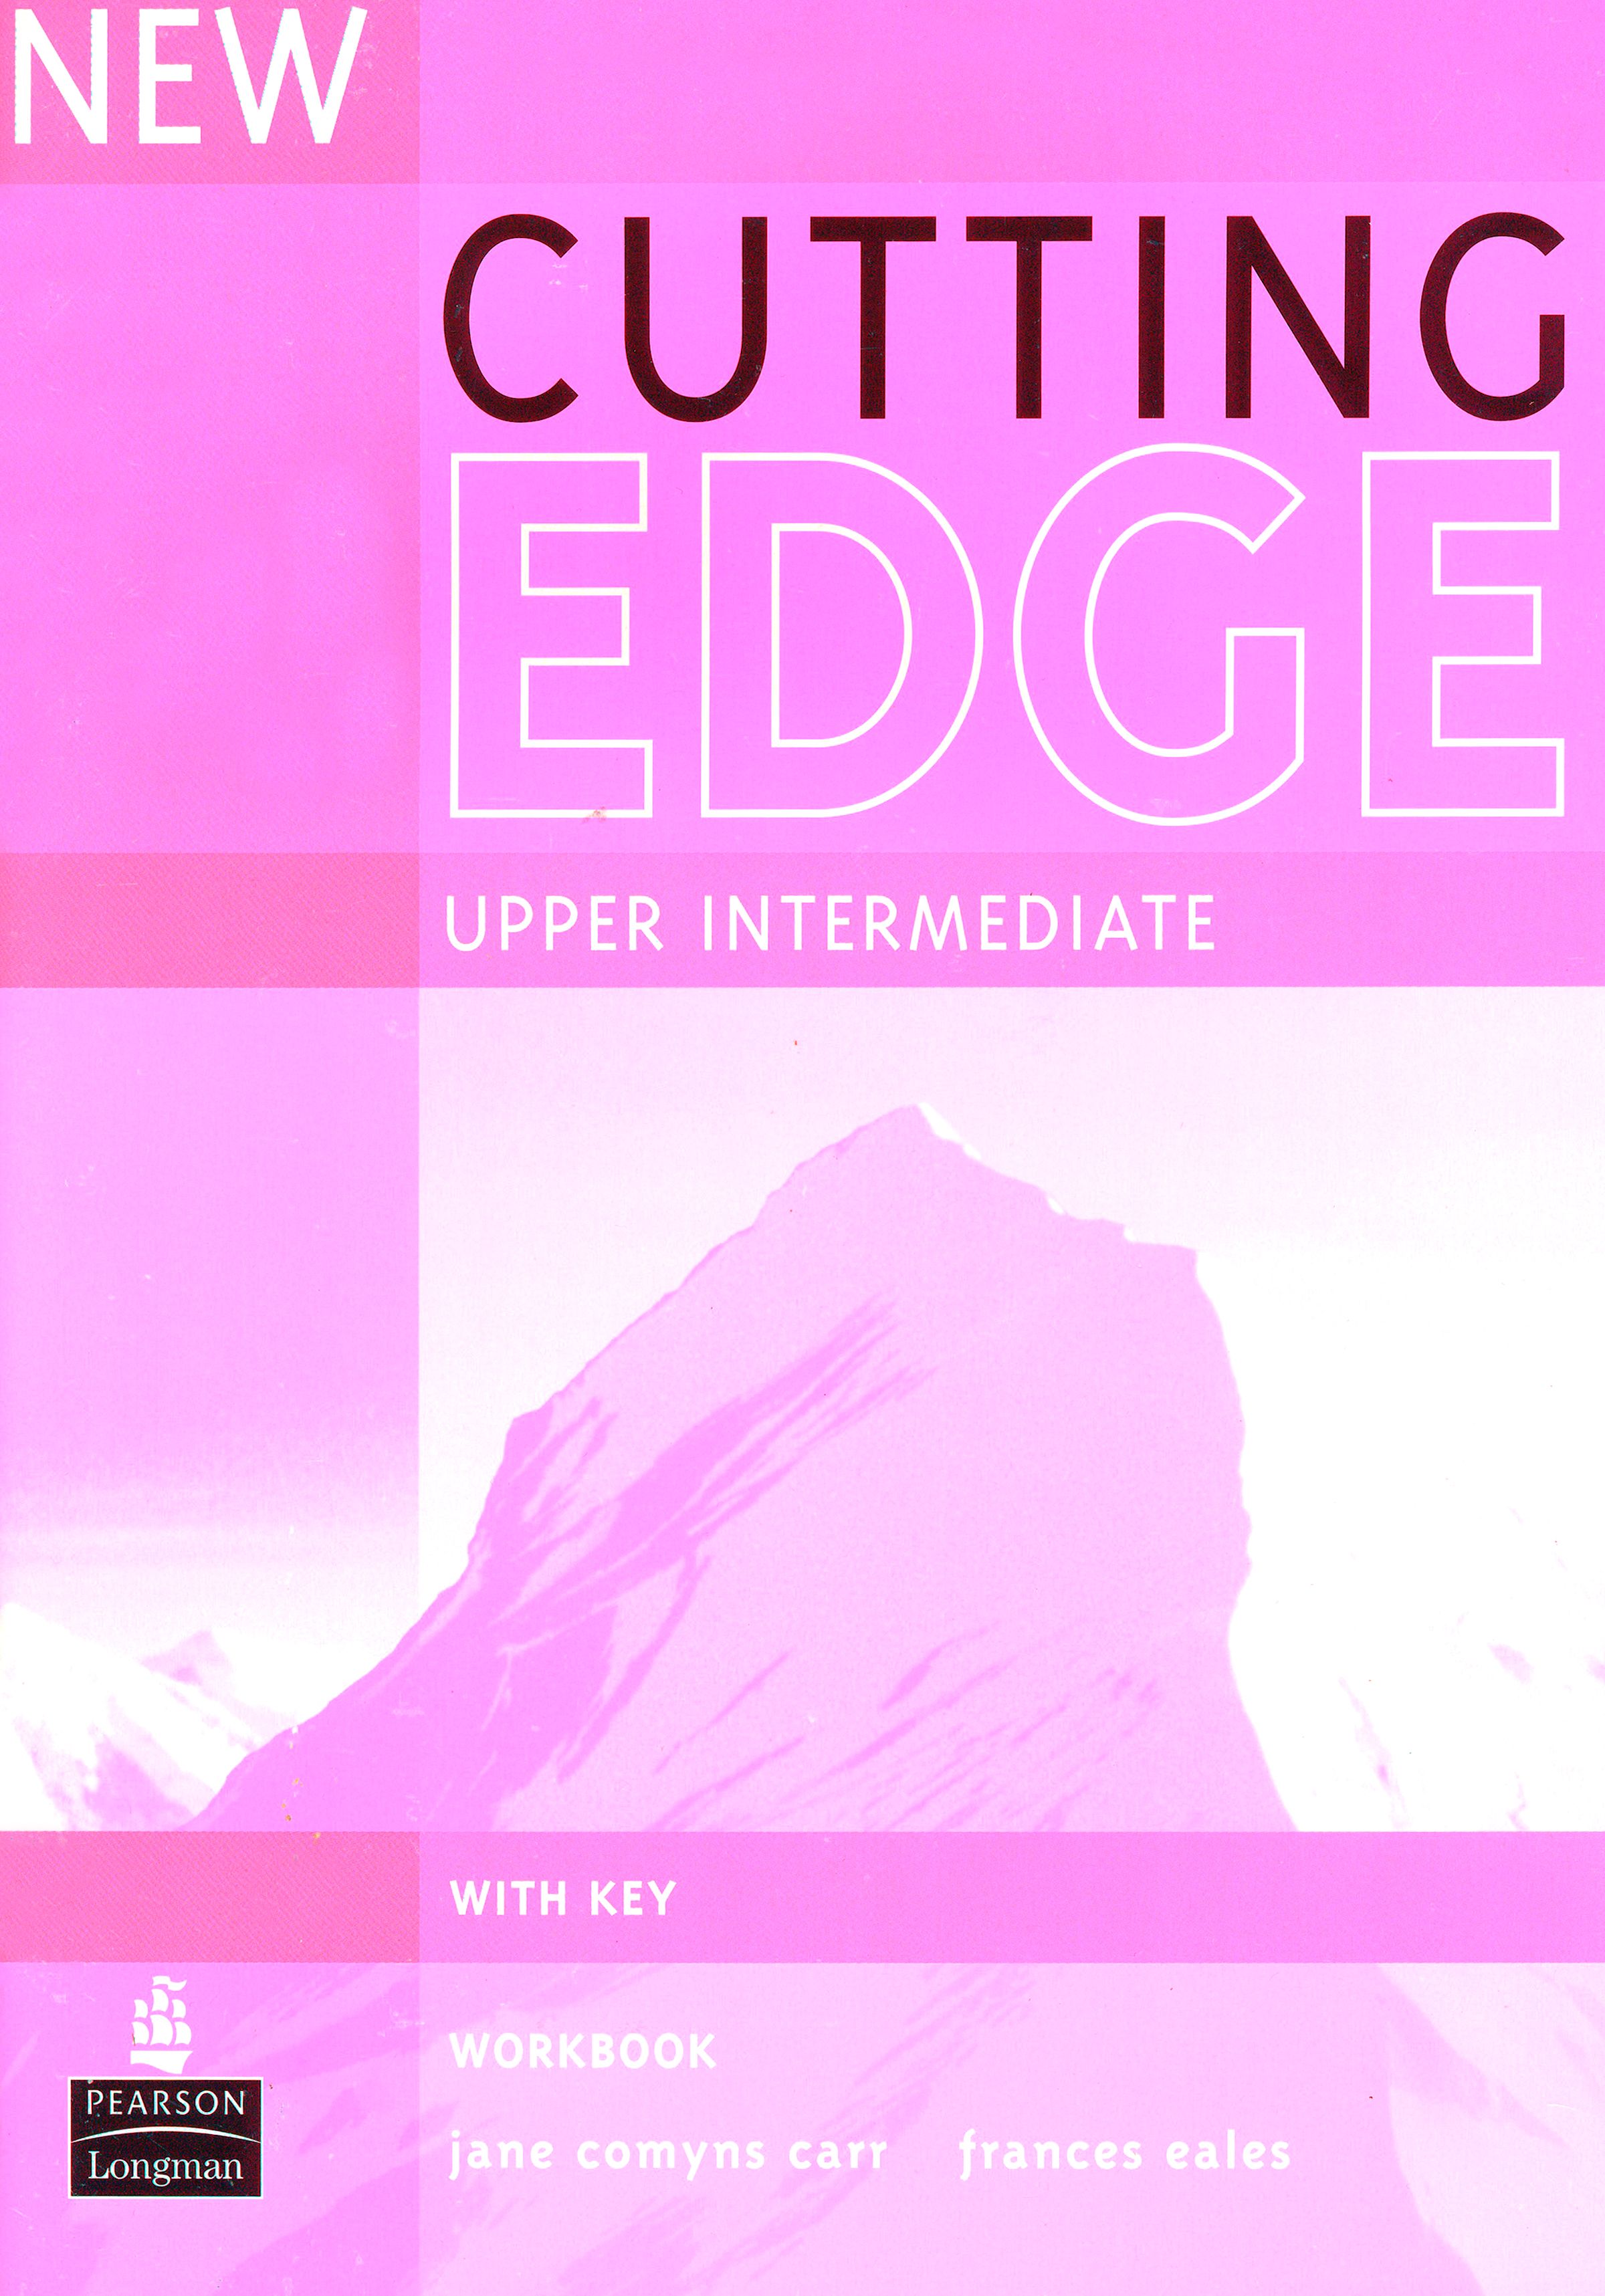 New Cutting Edge Advanced. Cutting Edge Upper Intermediate Workbook Keys. New Cutting Edge Intermediate: Workbook 2007. Cutting Edge Upper Intermediate Workbook pdf Keys.